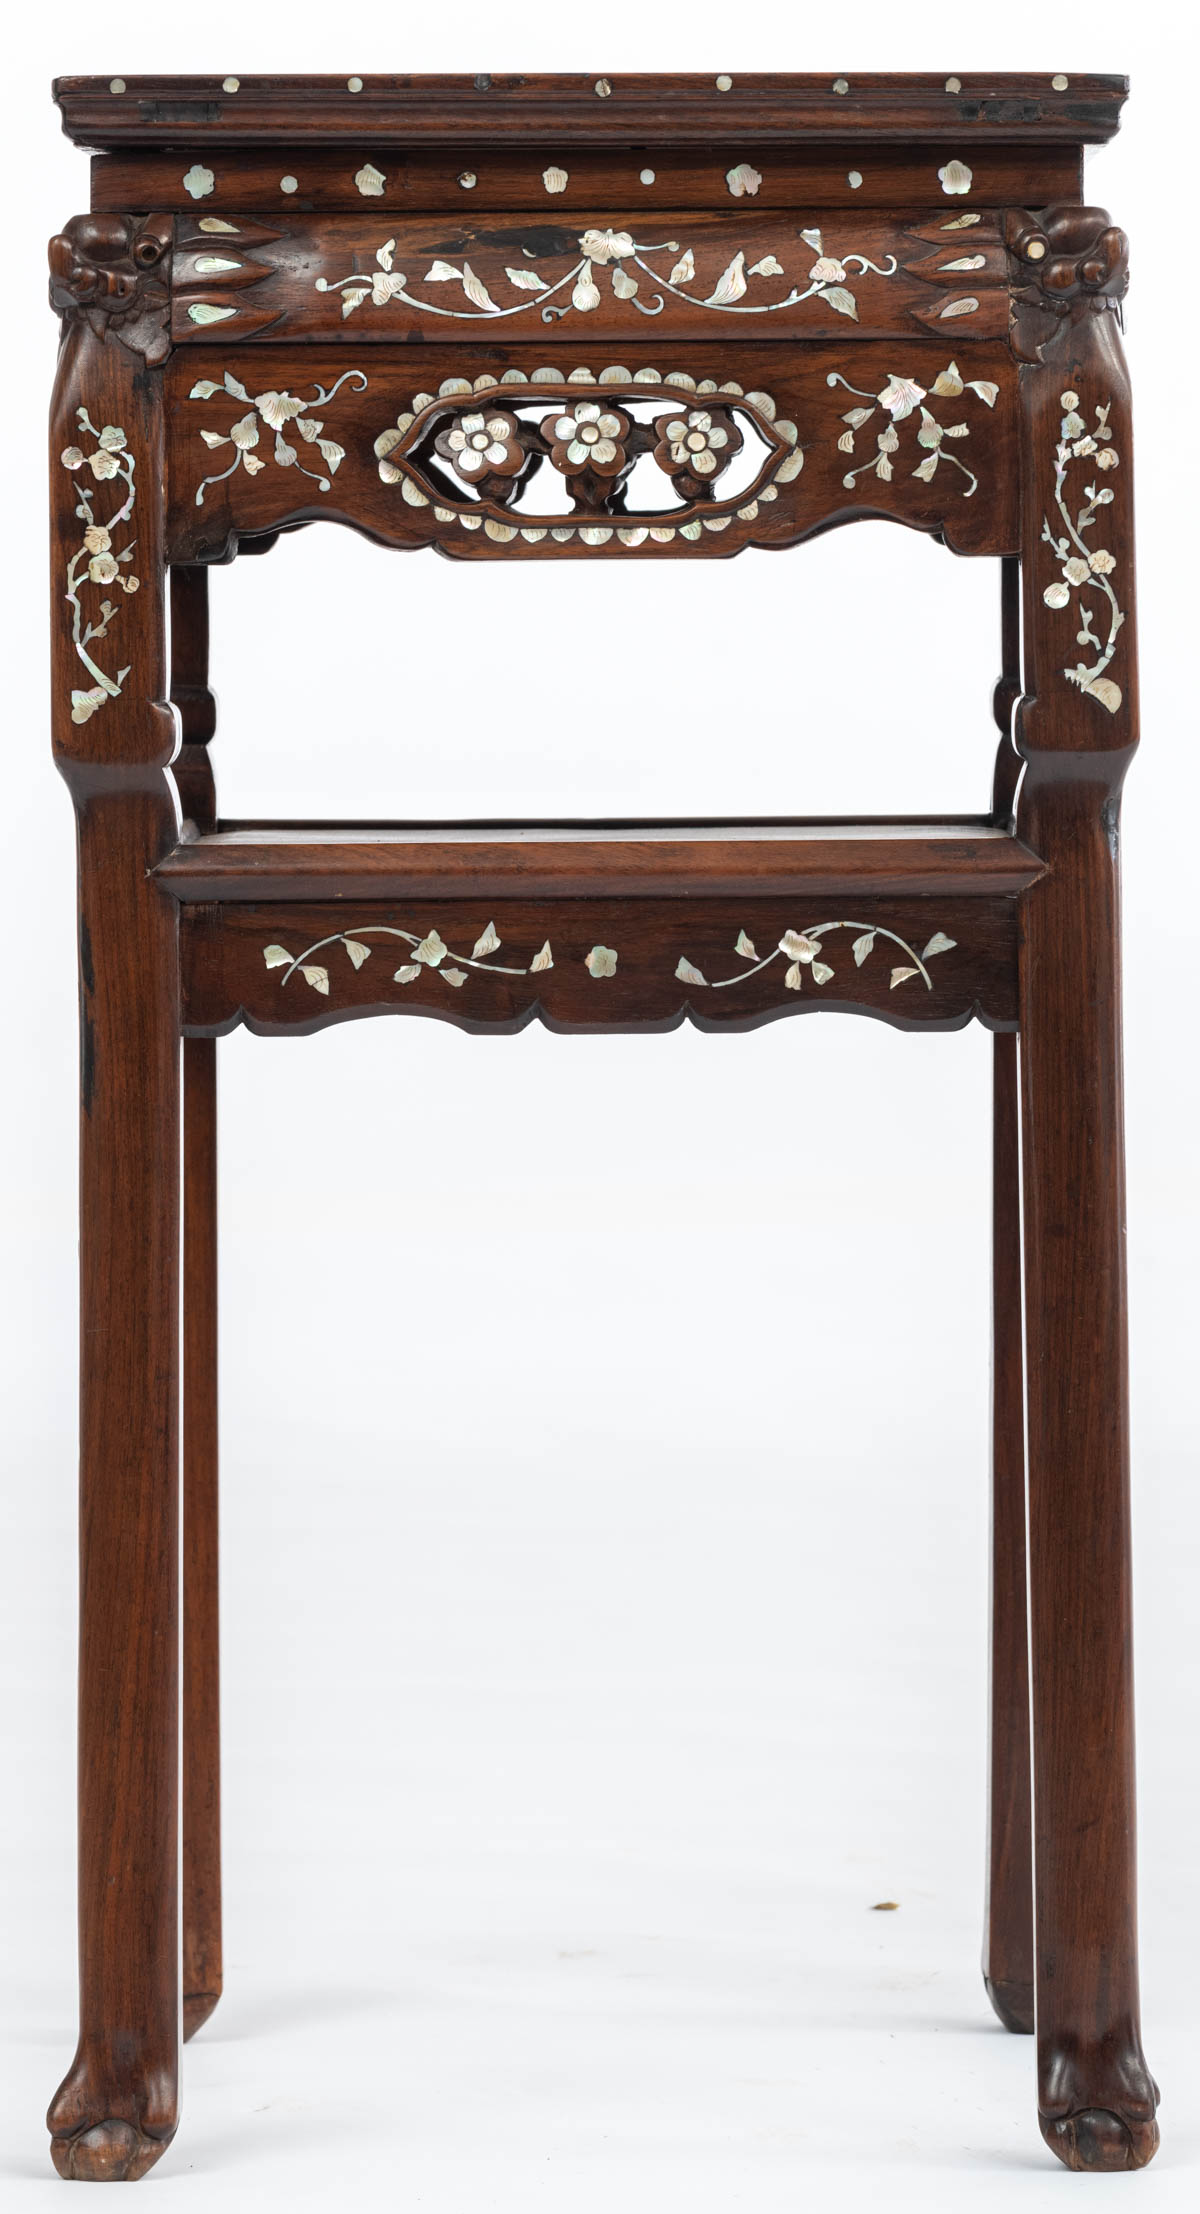 A Chinese exotic hardwood furniture set - Image 9 of 16